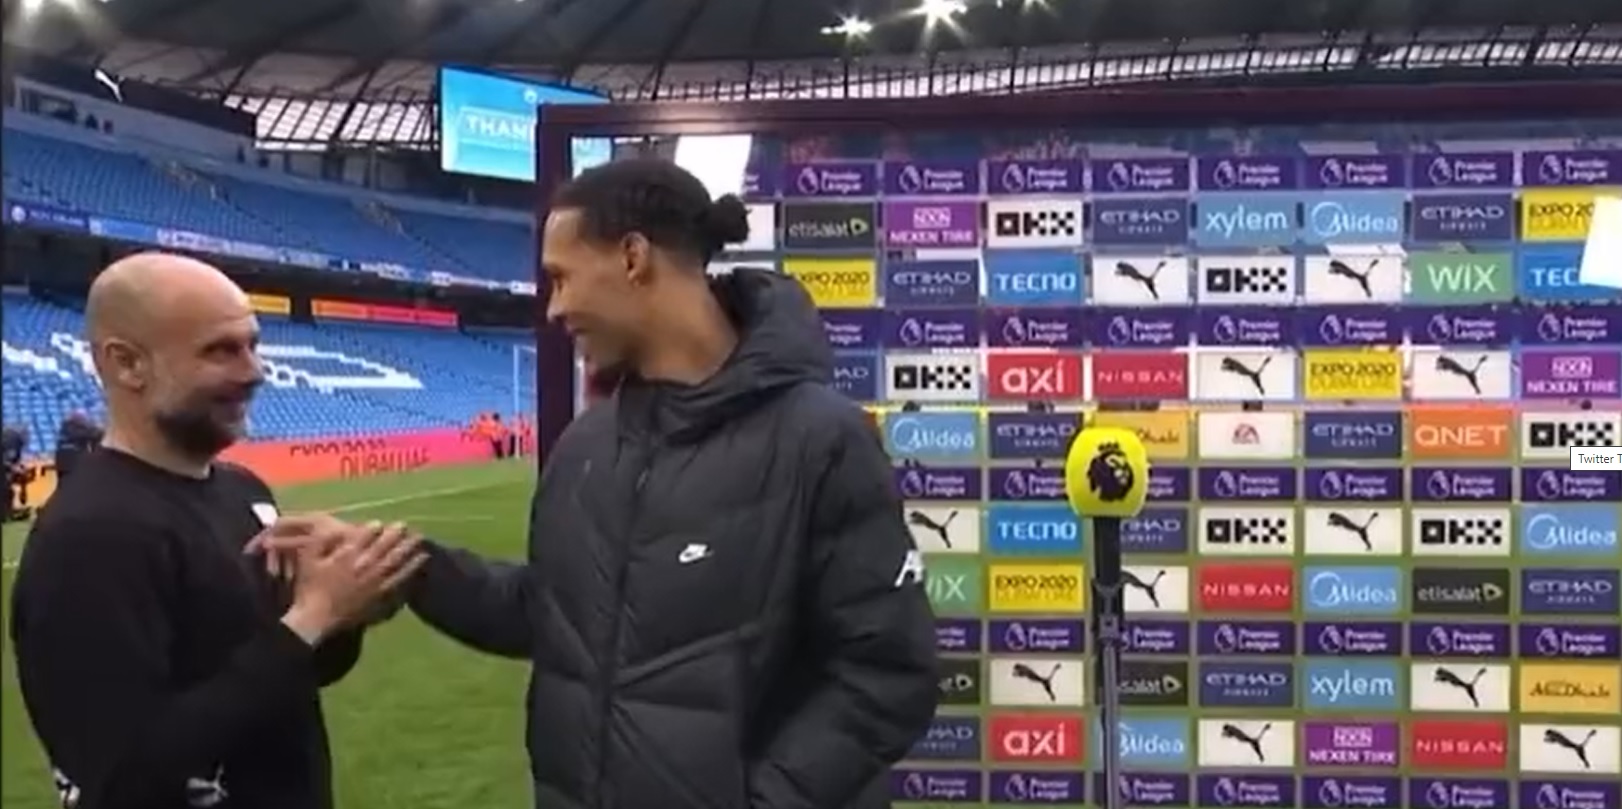 (Video) Watch Guardiola look adoringly at Van Dijk during post-match chat with Dutch defender